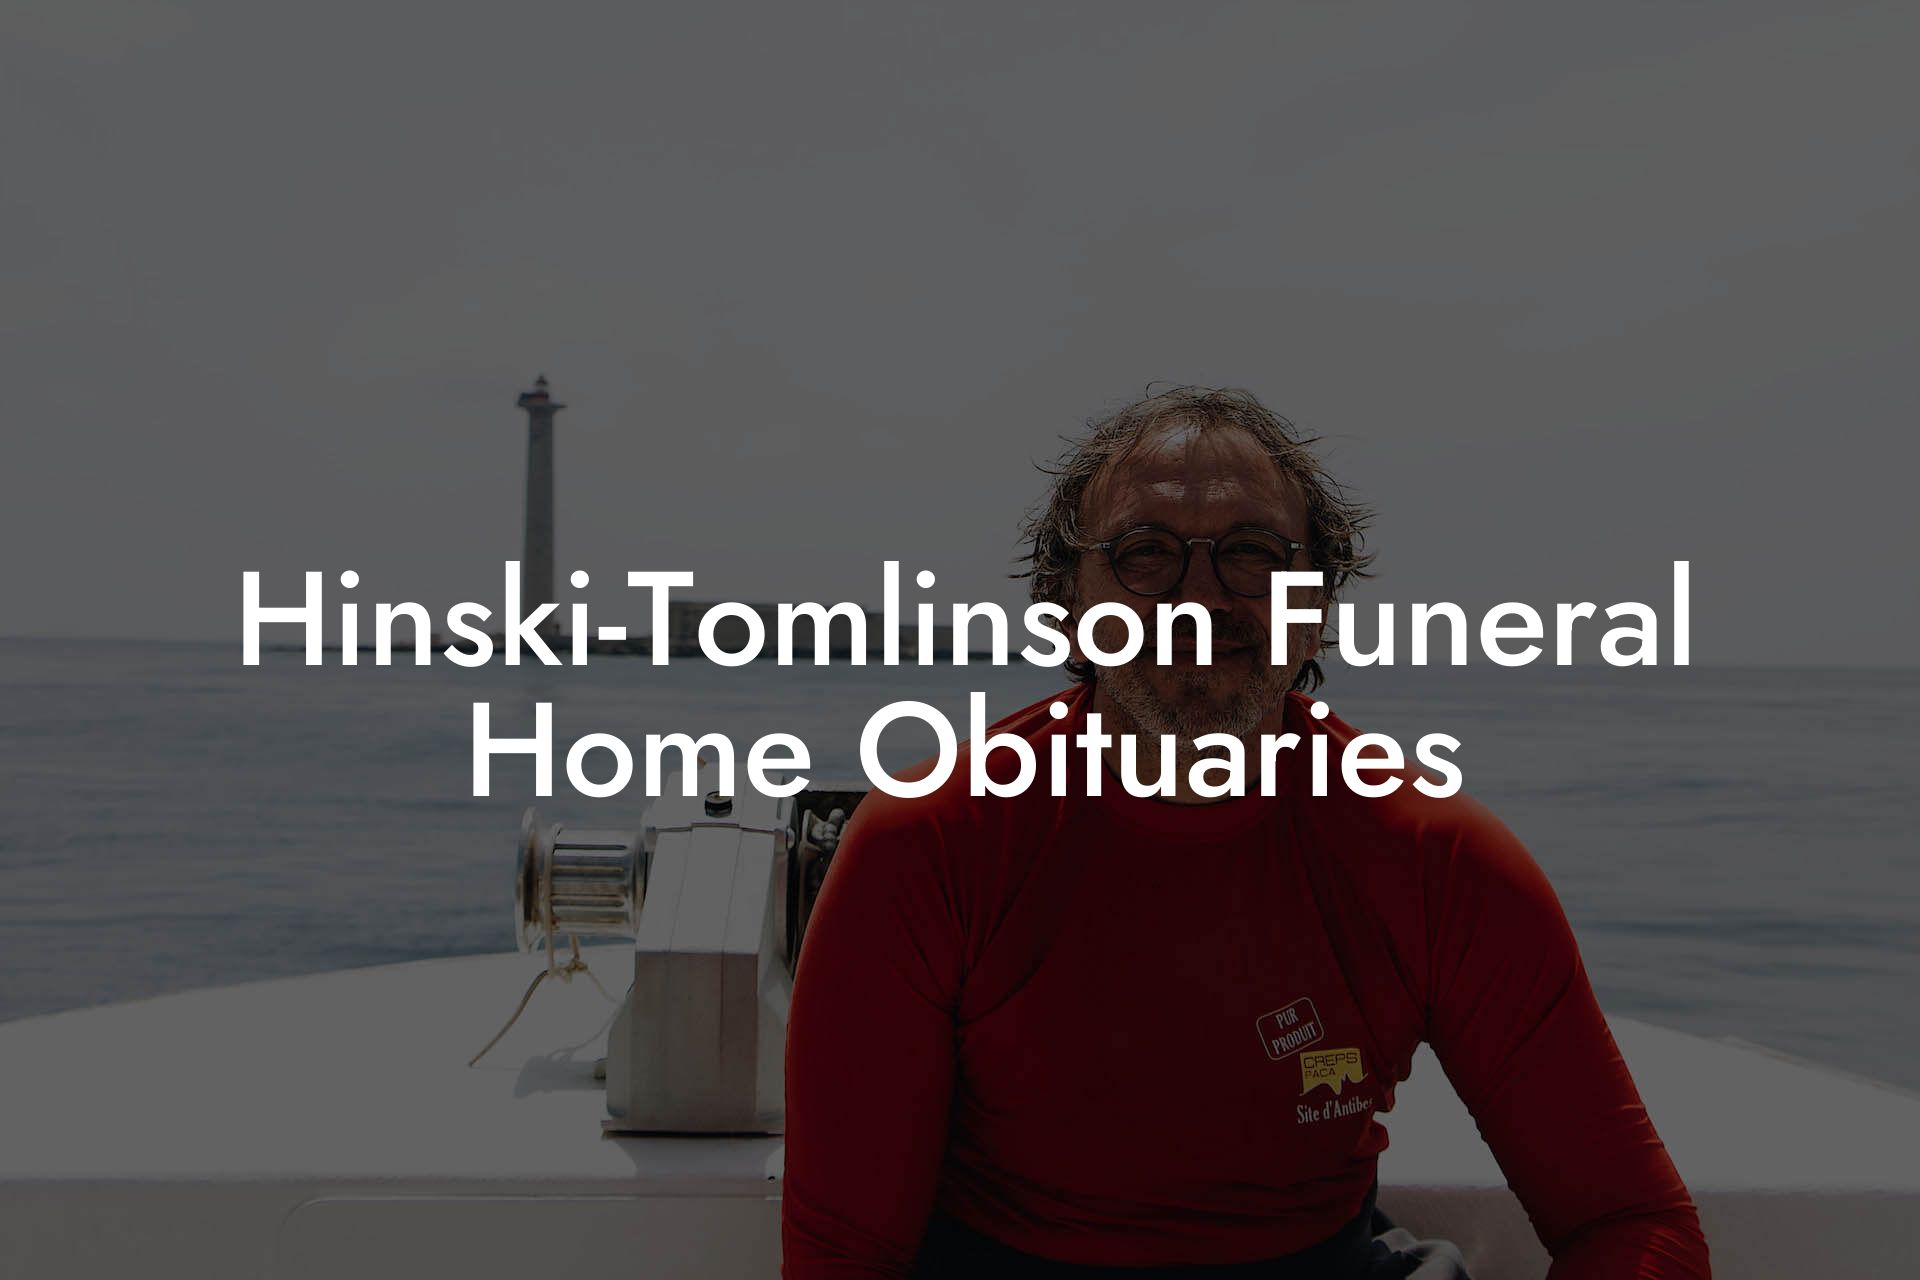 Hinski-Tomlinson Funeral Home Obituaries